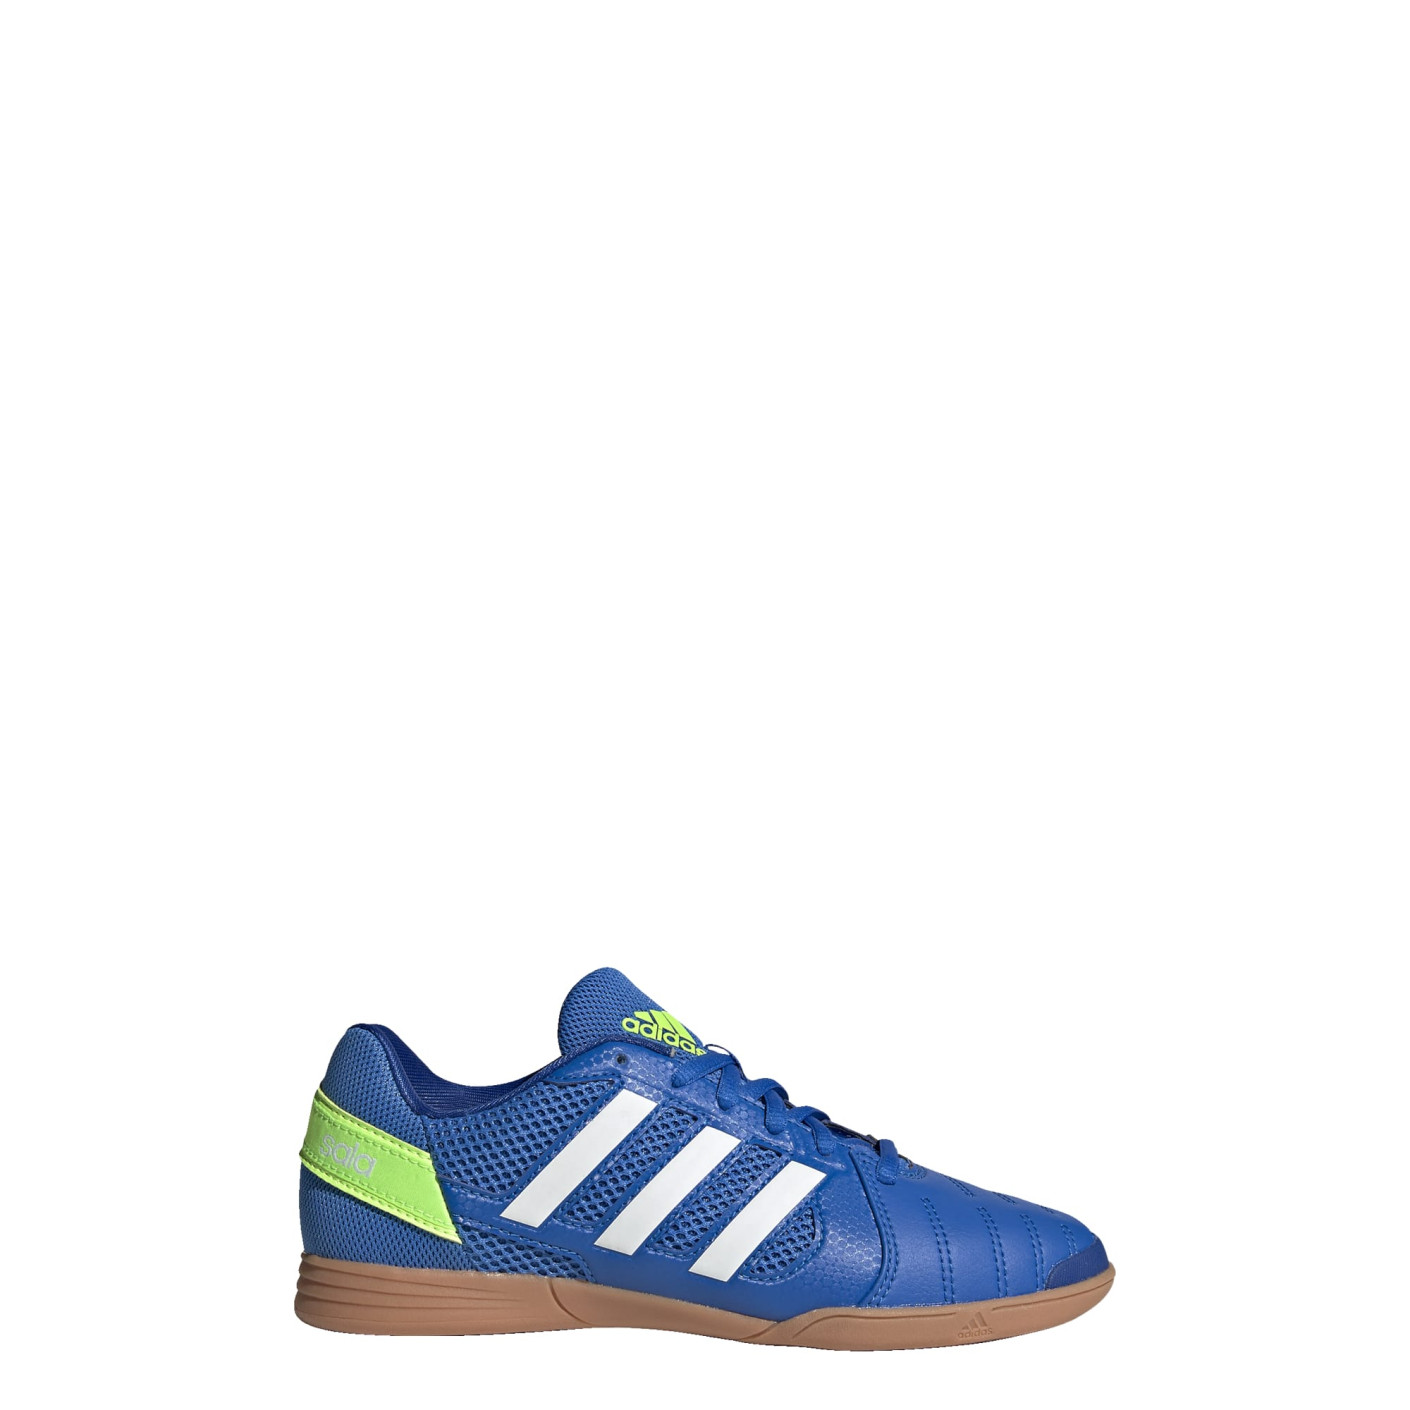 Chaussures de football en salle adidas Top Sala (IN) pour enfant Bleu blanc vert